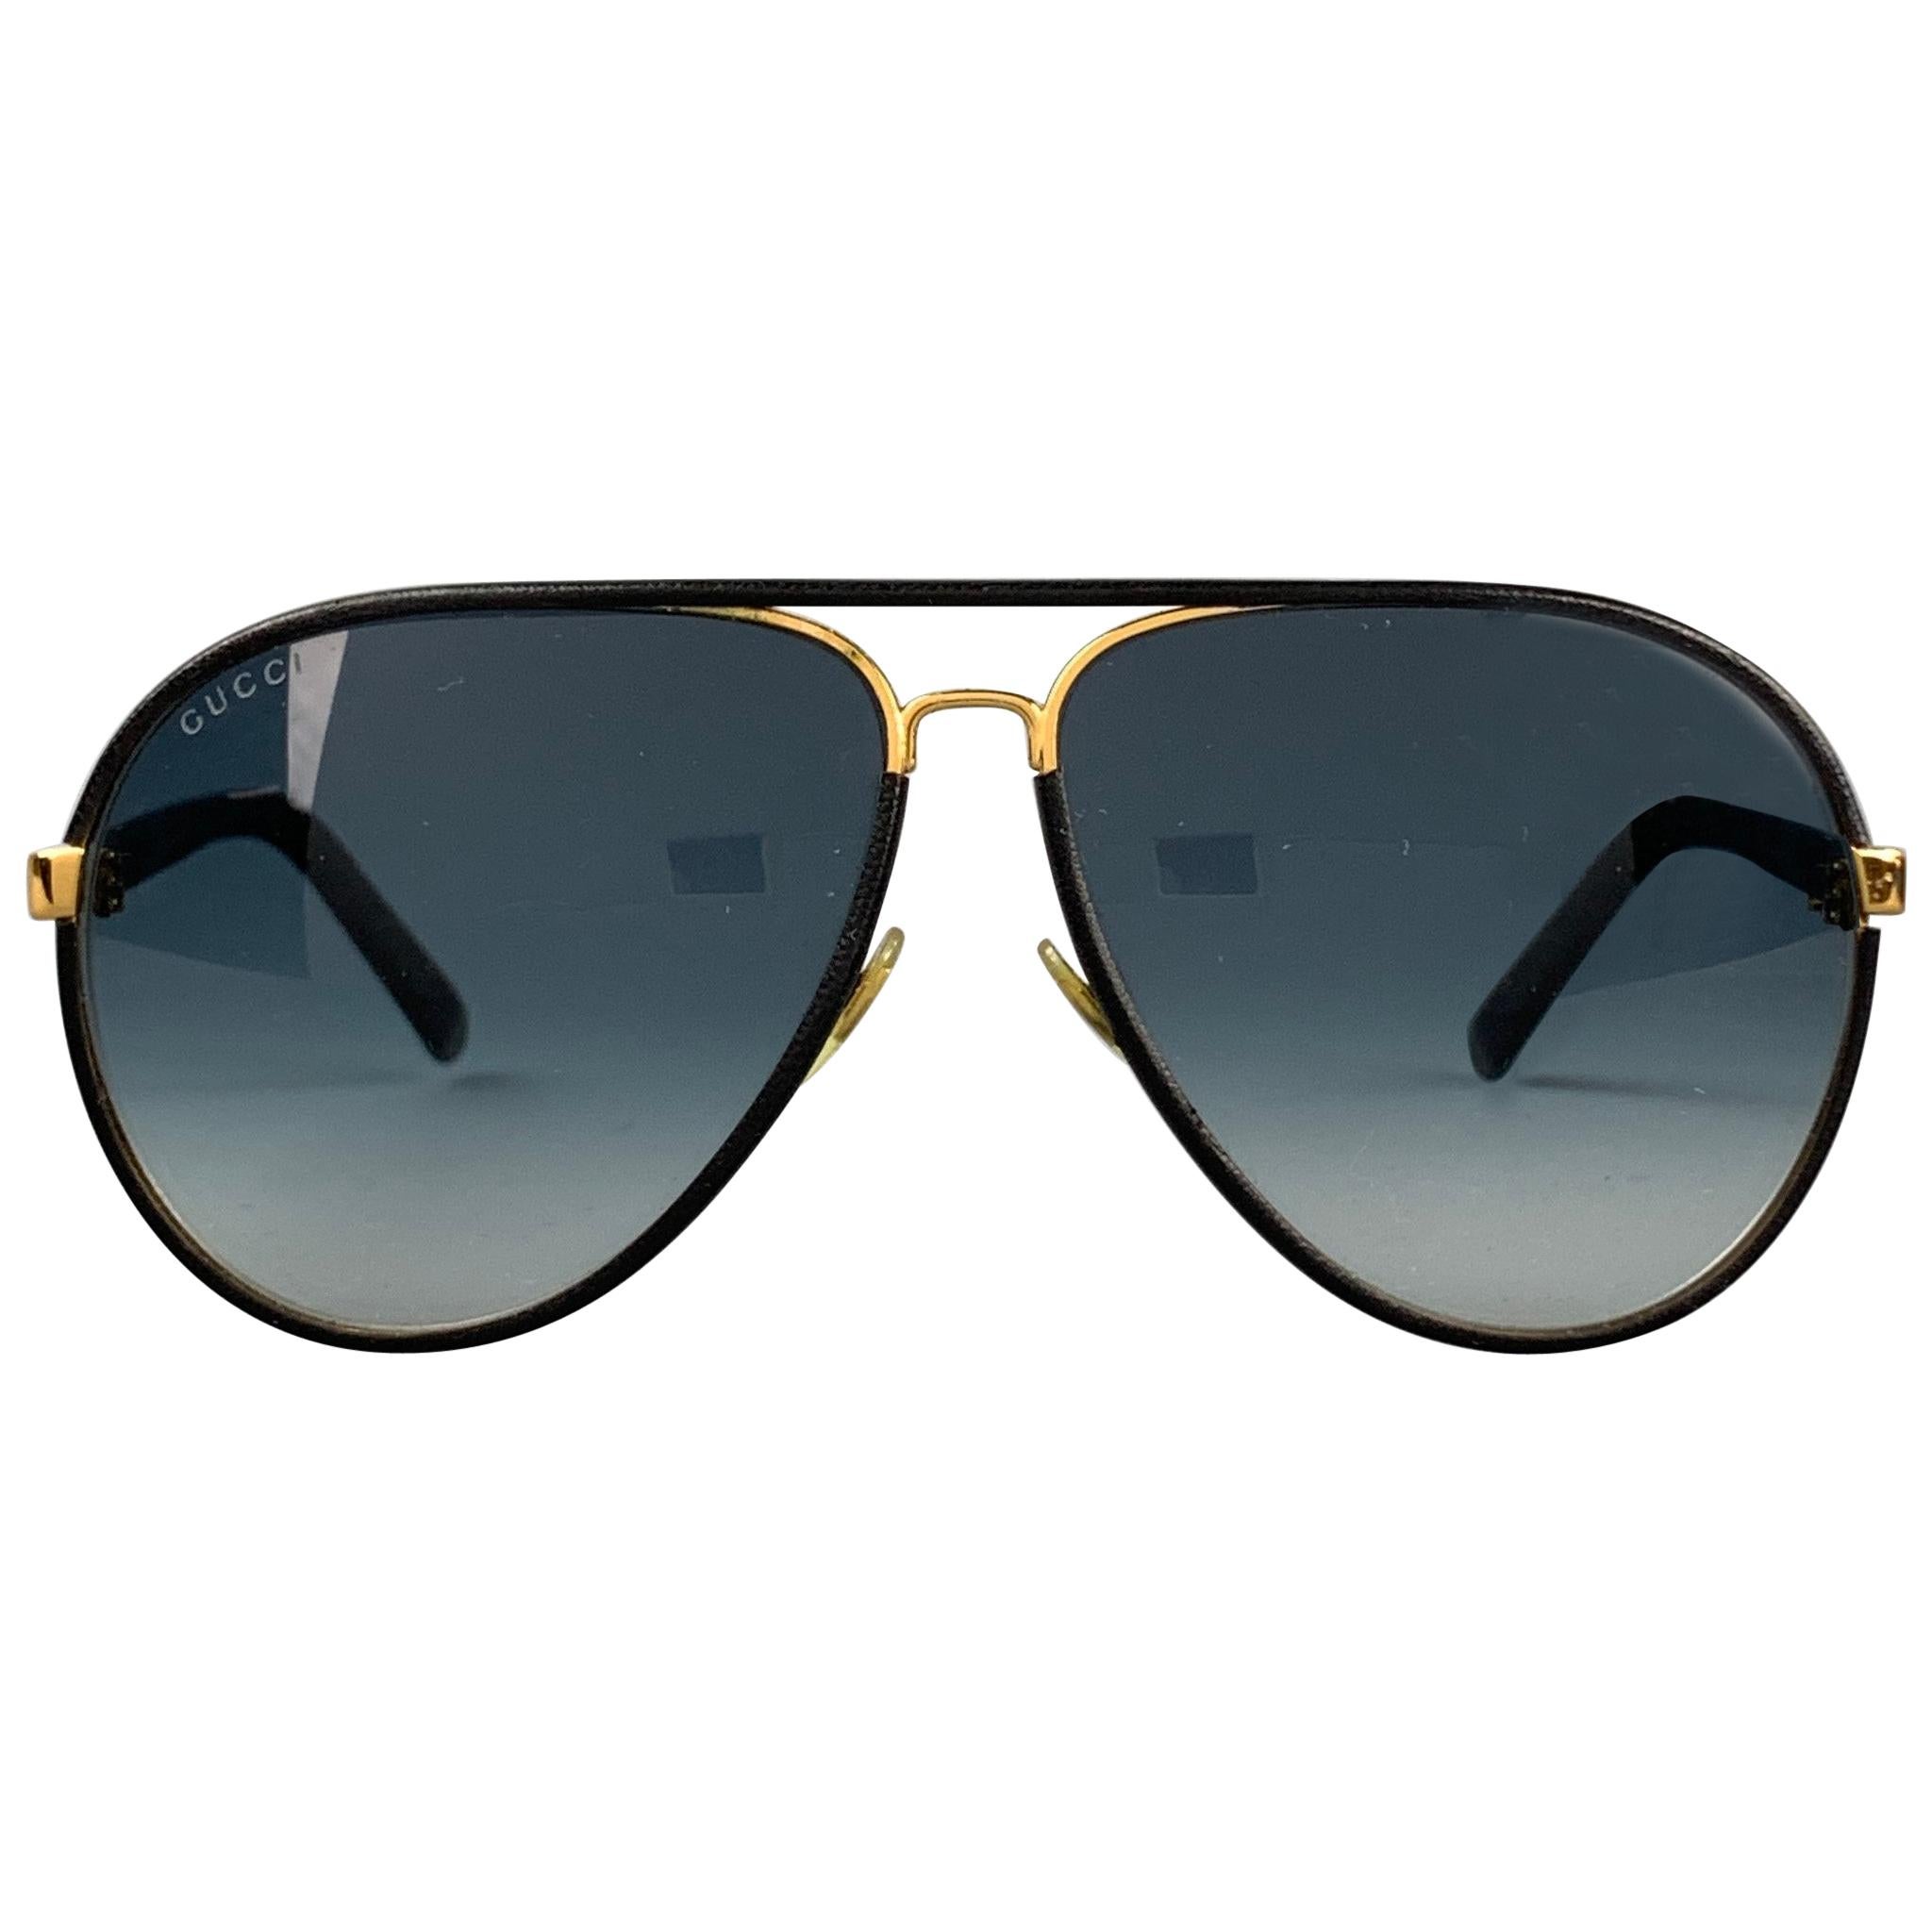 GUCCI Black Leather Gold Tone Aviator Sunglasses